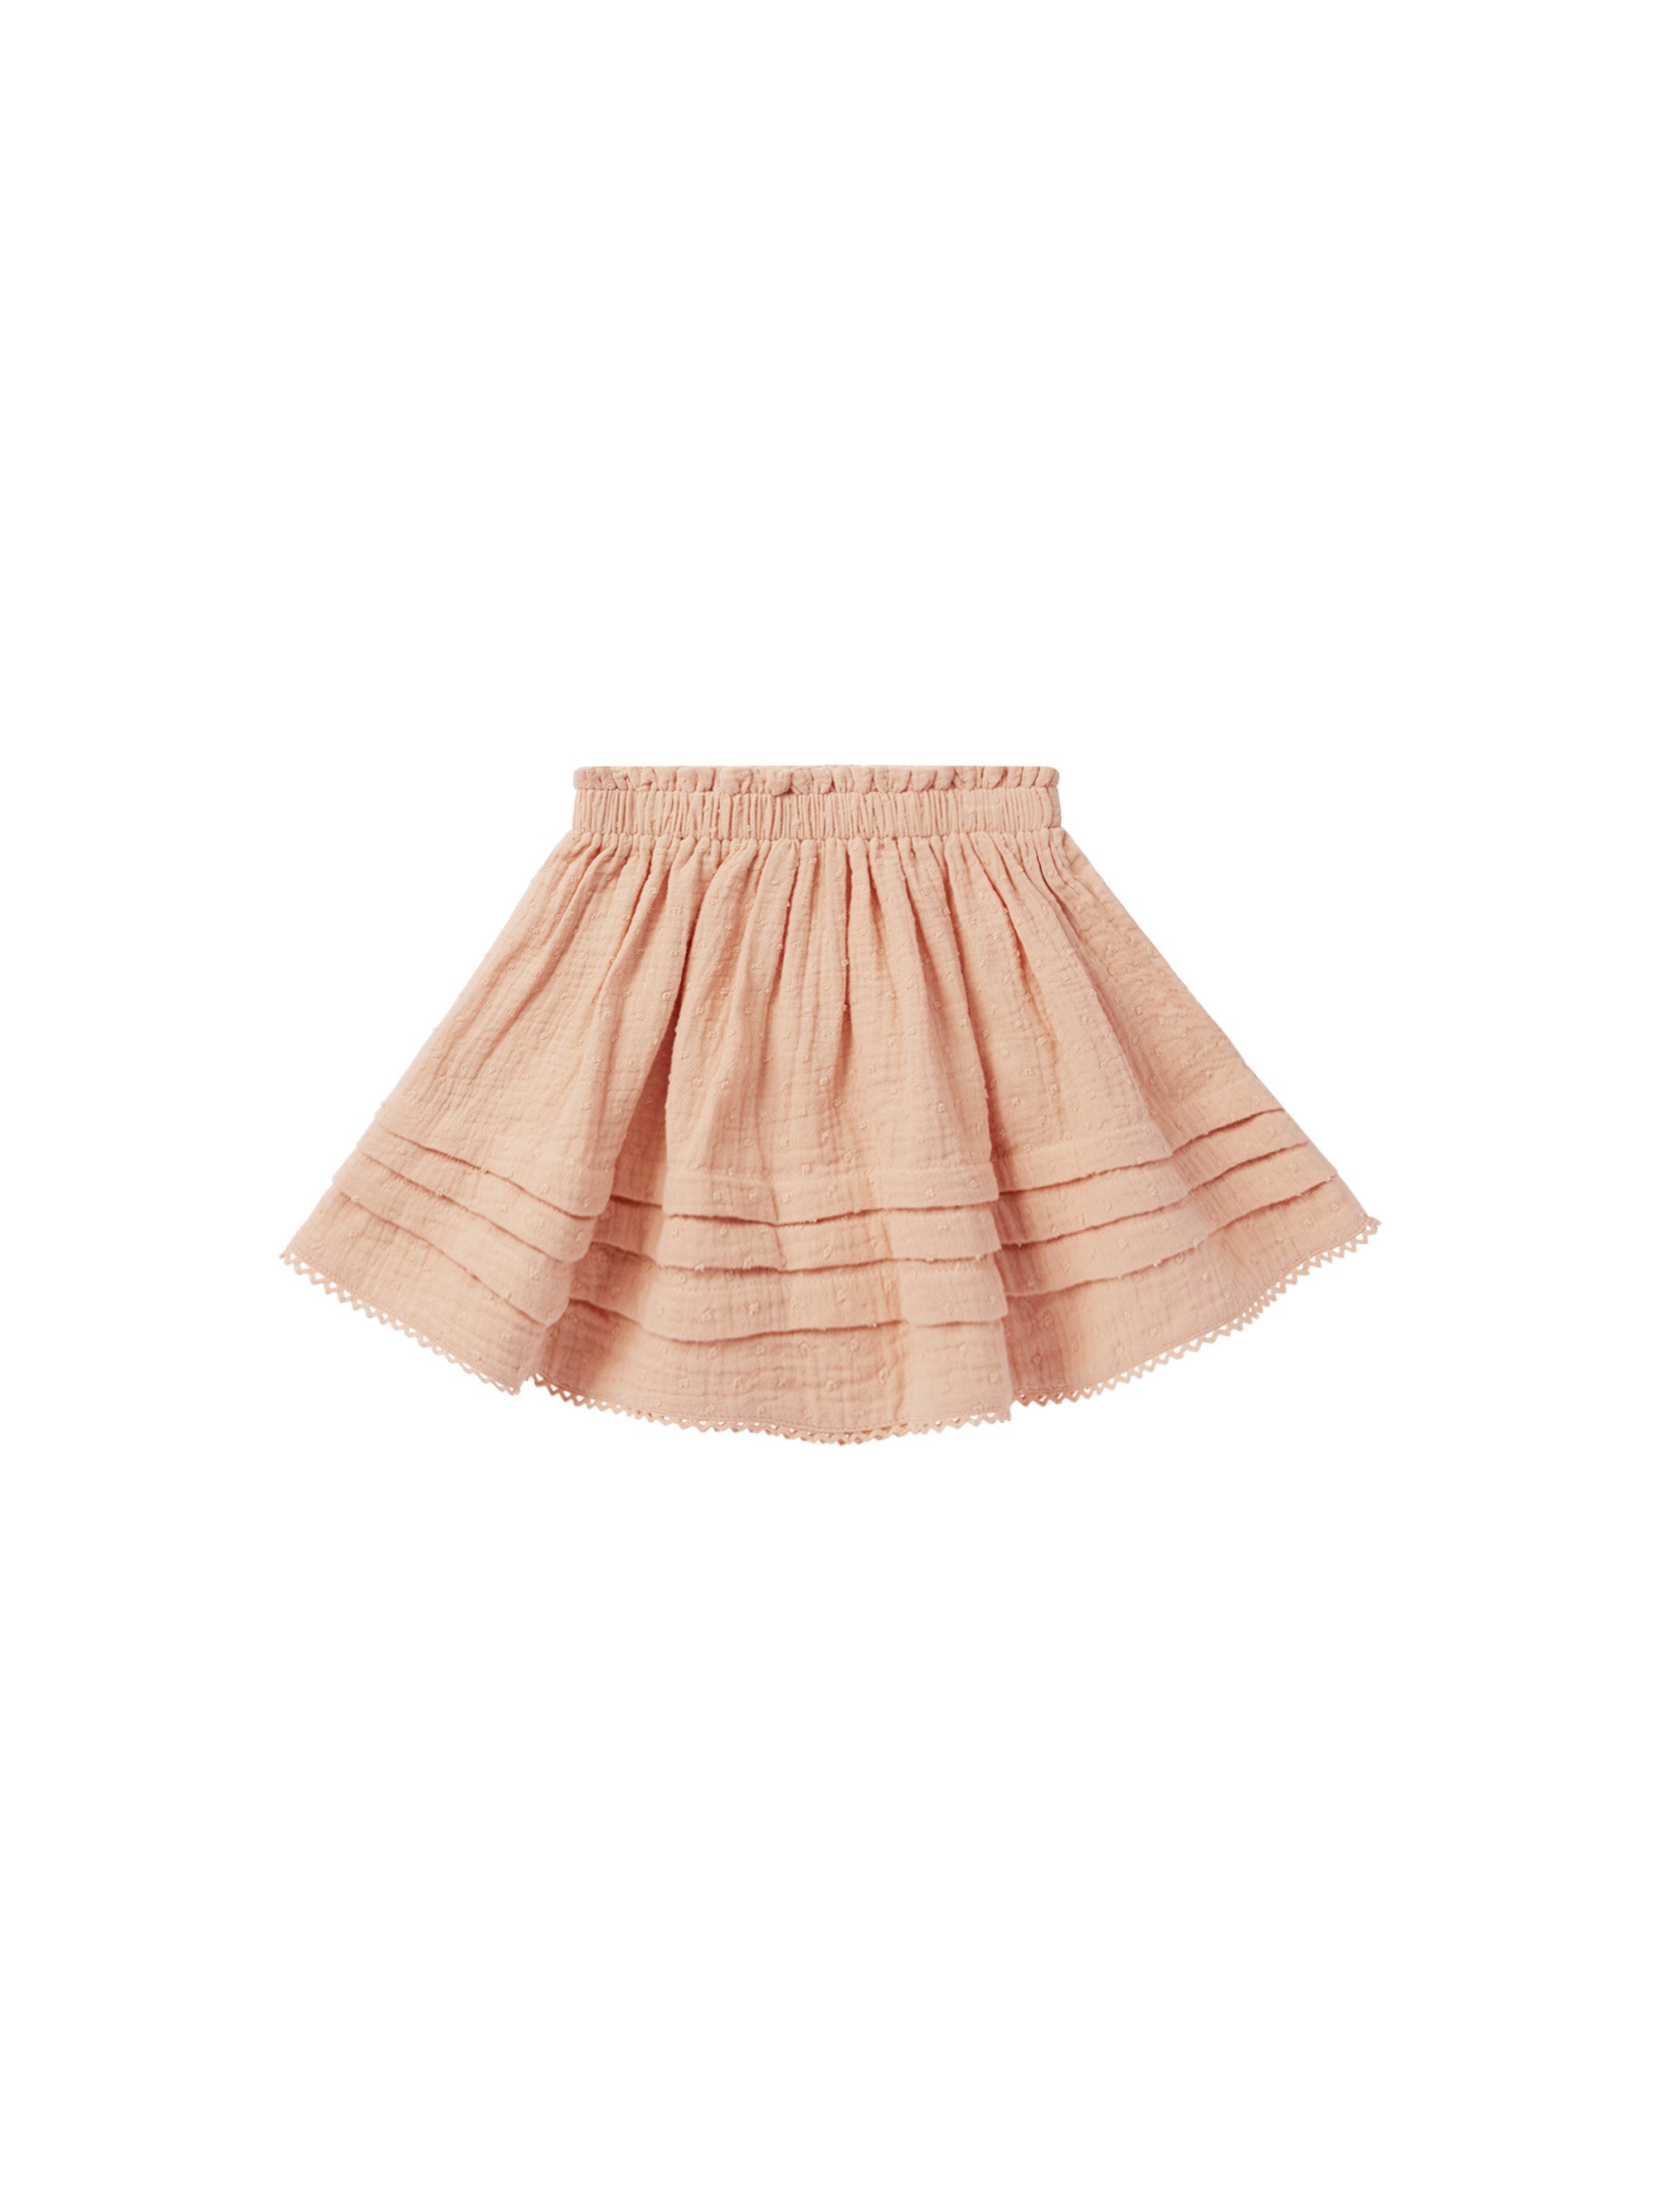 Mae Skirt - Apricot - Twinkle Twinkle Little One